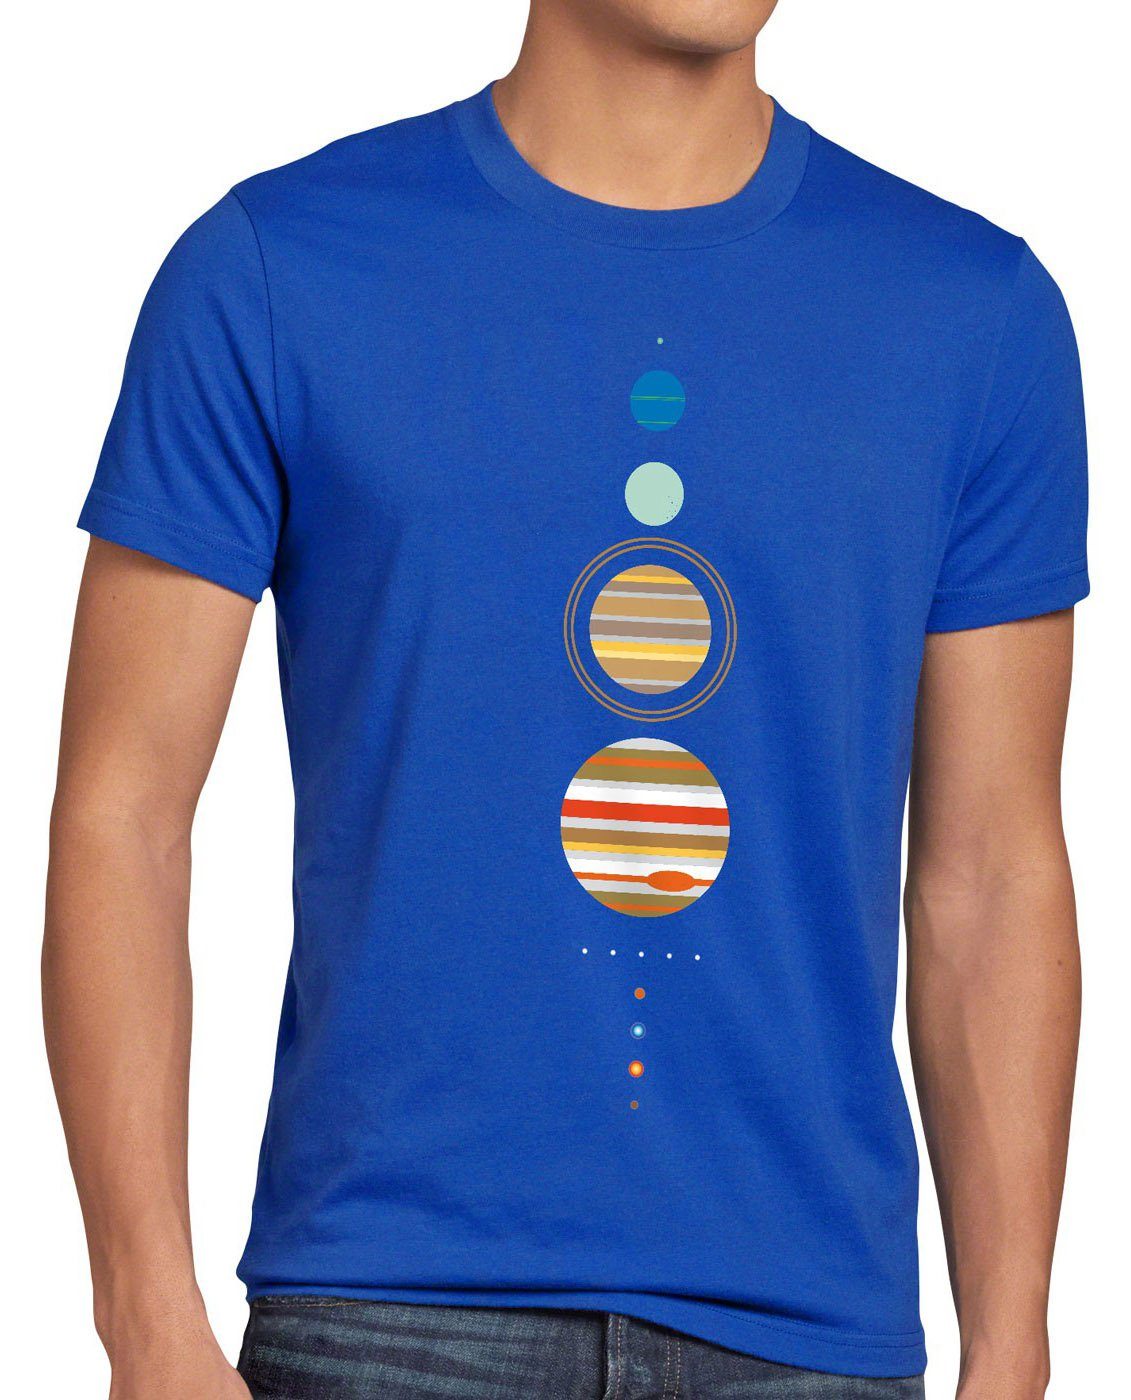 bang style3 planeten erde Print-Shirt Herren cooper theory T-Shirt Sonnensystem system big Sheldon blau